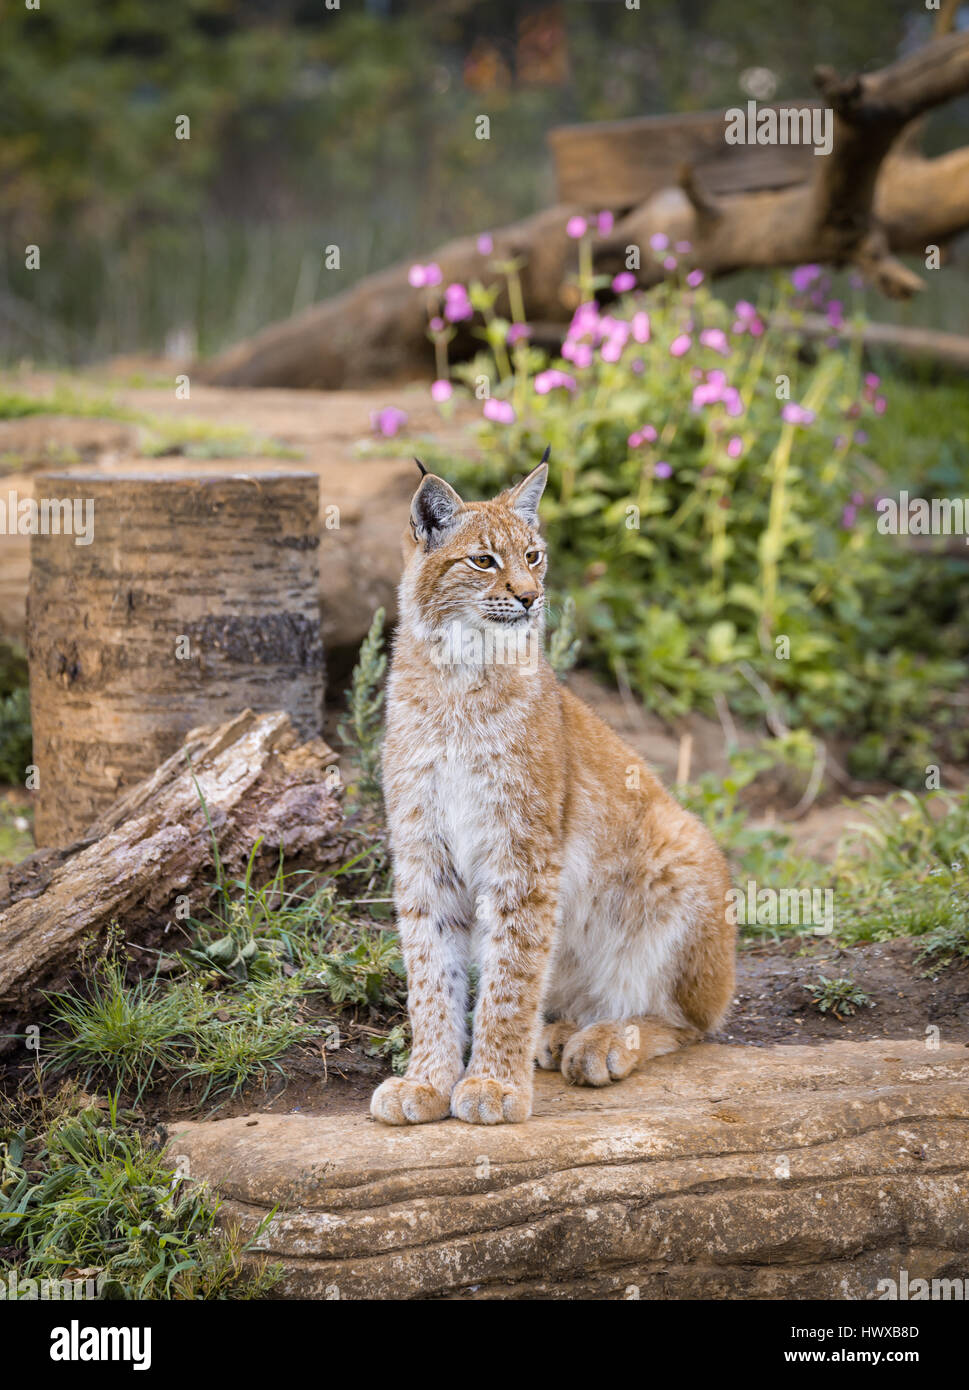 Elegant lynx sitting on a wood outdoors Stock Photo - Alamy